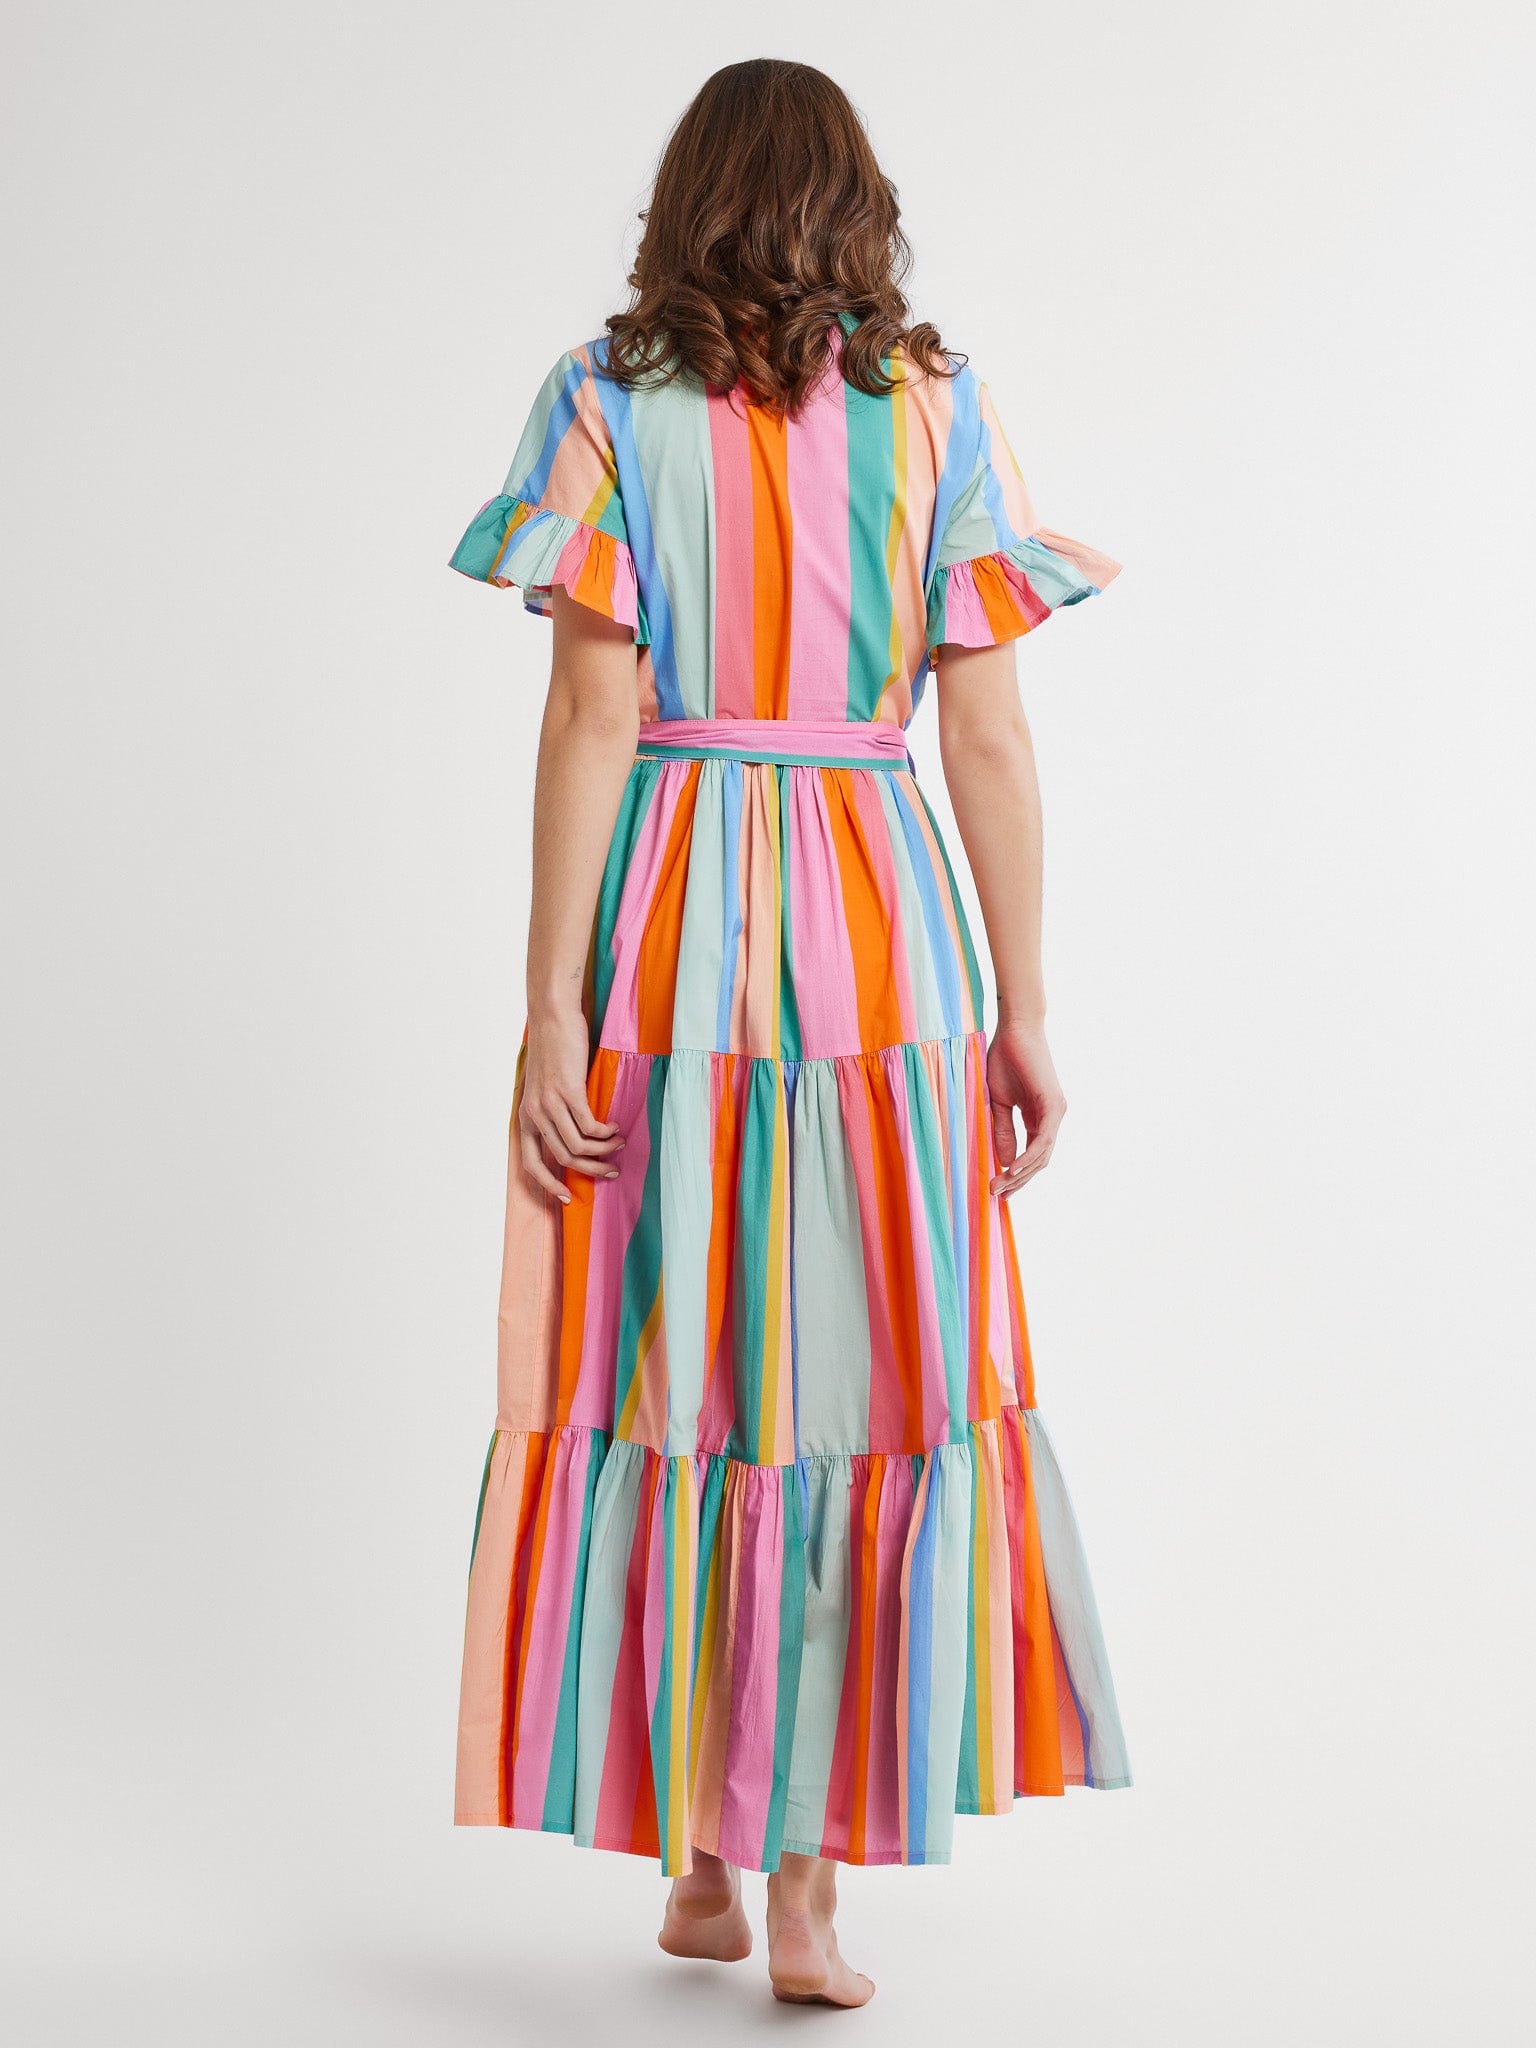 MILLE Clothing Victoria Dress in Confetti Stripe